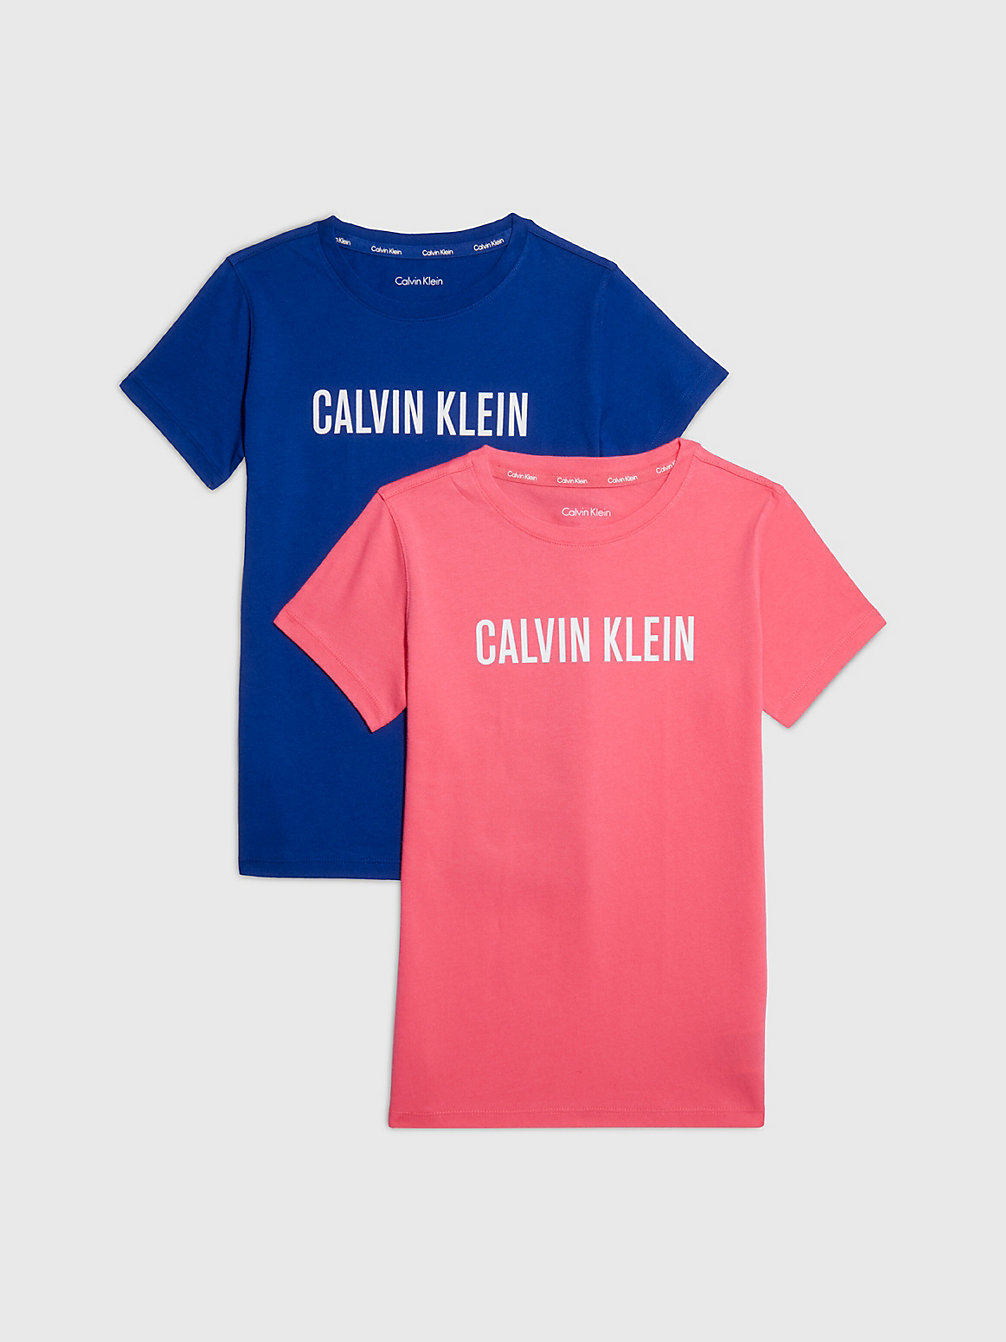 Pack De 2 Camisetas - Intense Power > PINKFLASH/BOLDBLUE > undefined nina > Calvin Klein